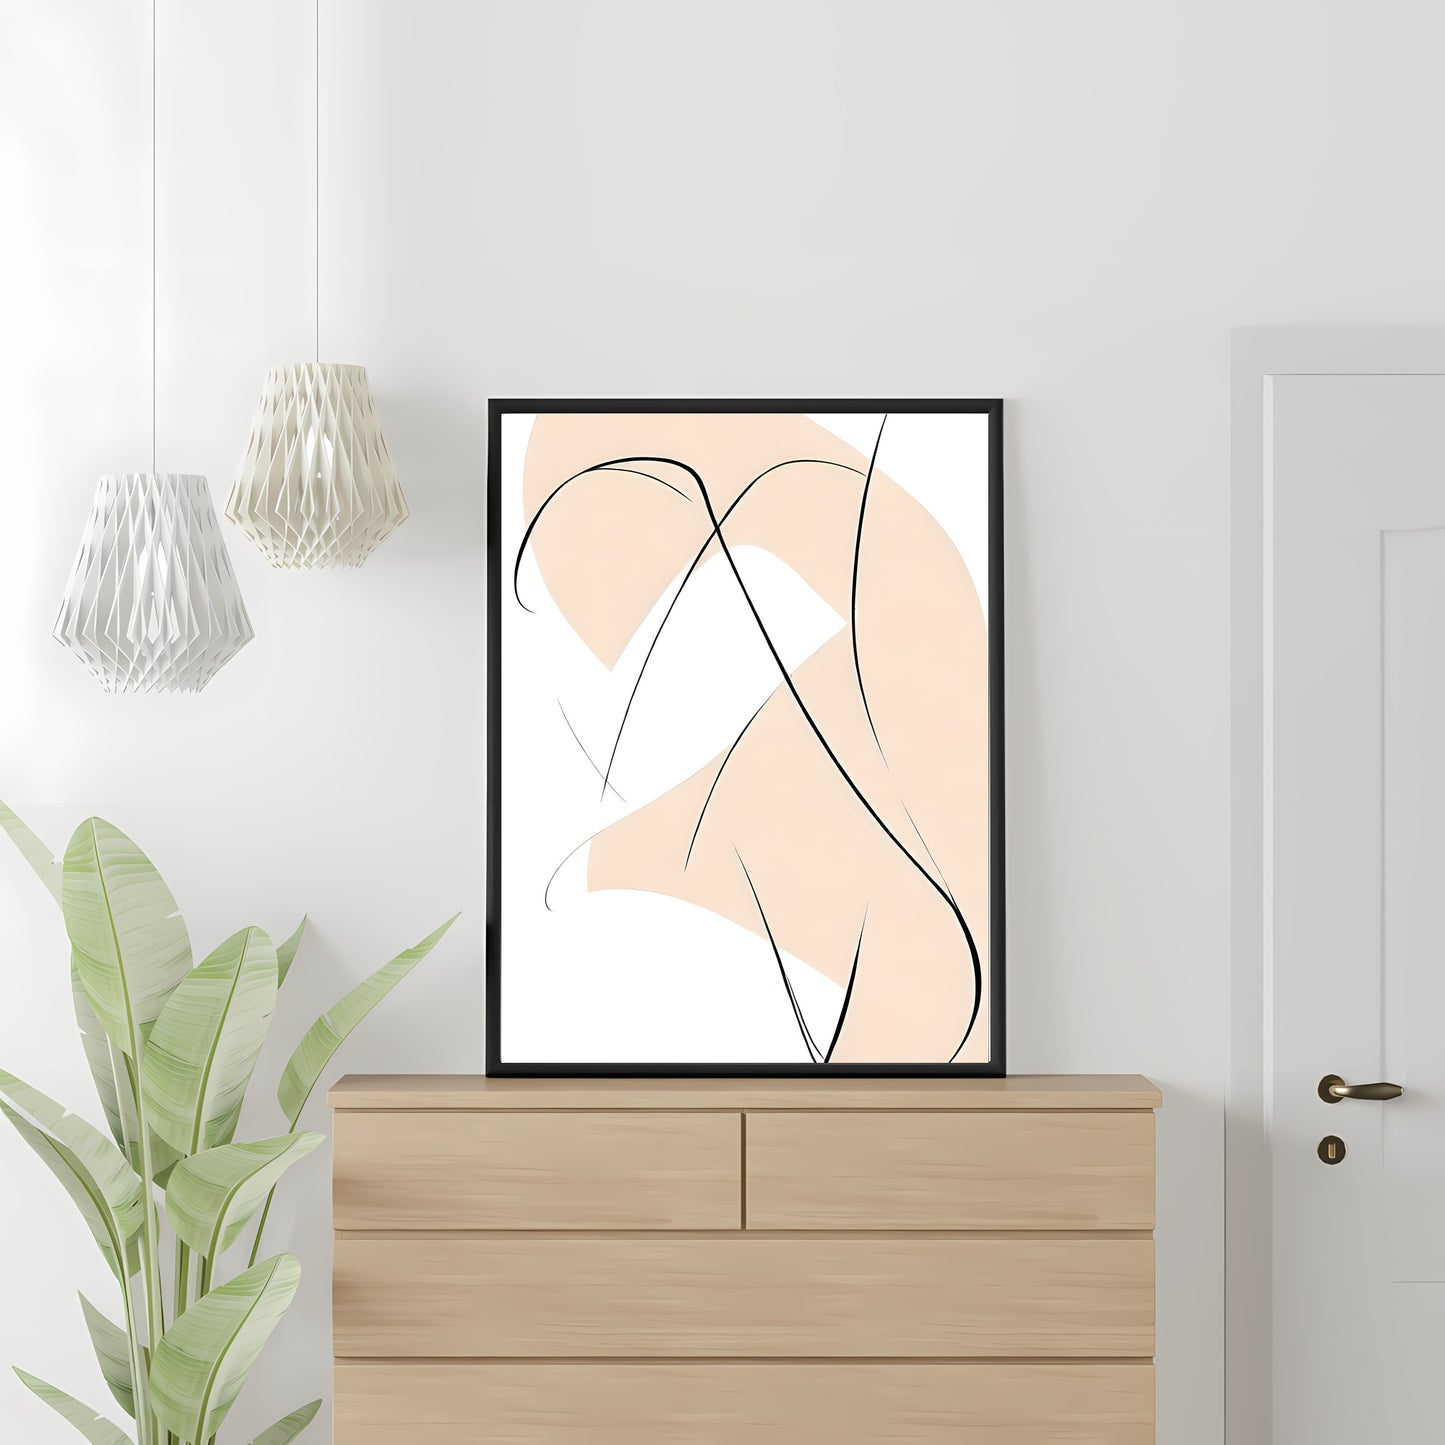 Abstract wall beige pink white modern minimalist artprint bedroom decor neutral tones Paper Poster Print